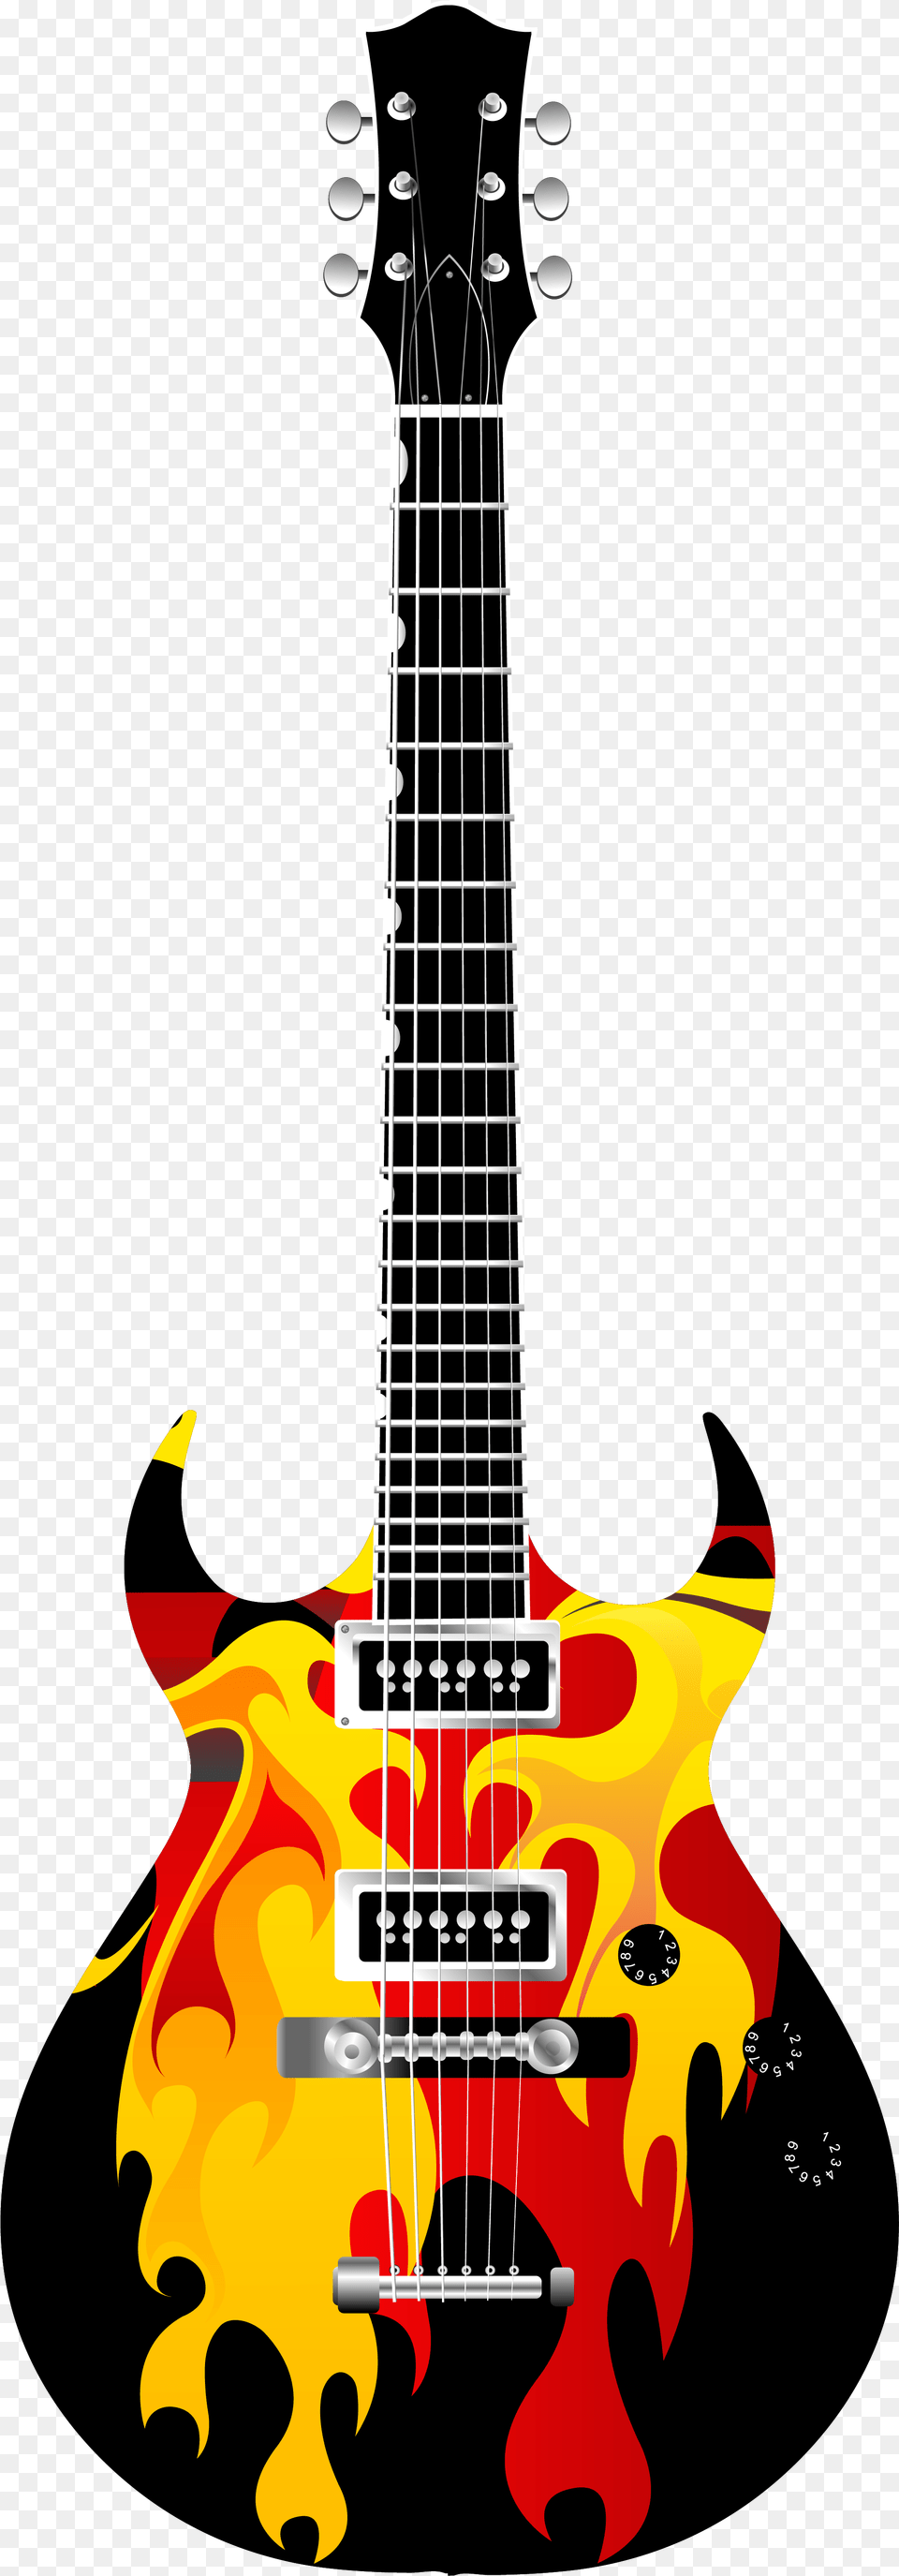 Guitar Clipart Guitar Images Hd, Musical Instrument, Bass Guitar, Electric Guitar Png Image